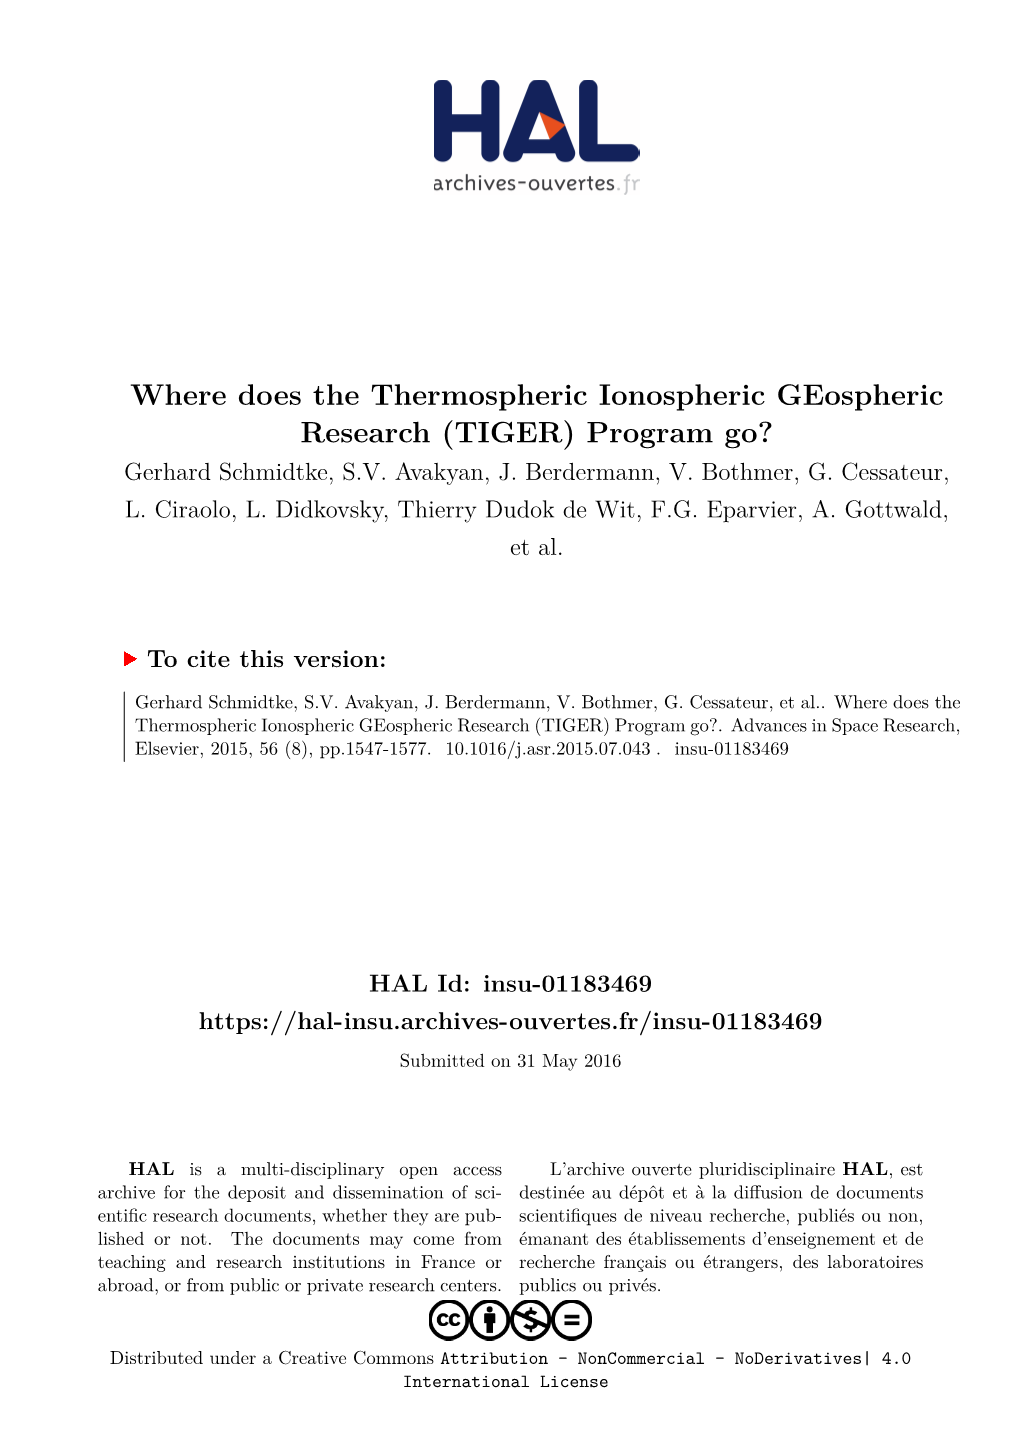 Where Does the Thermospheric Ionospheric Geospheric Research (TIGER) Program Go? Gerhard Schmidtke, S.V